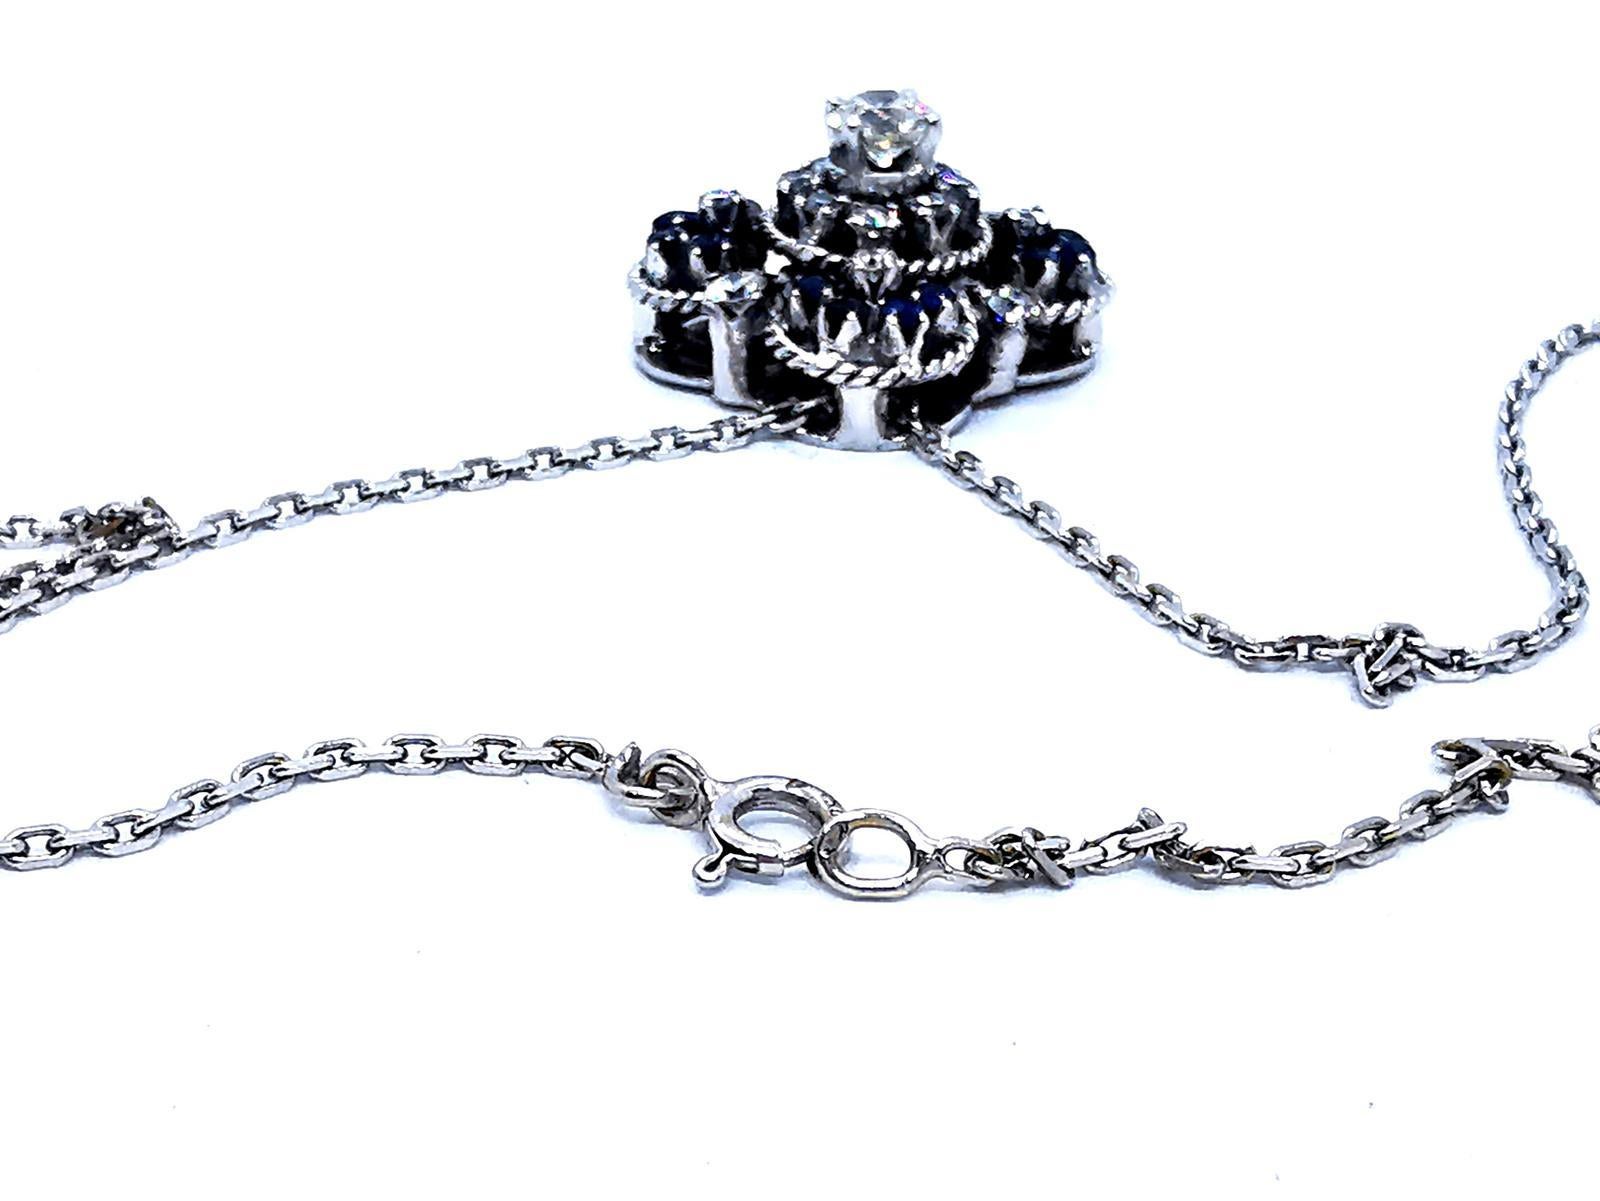 Chain Necklace White Gold Diamond 6